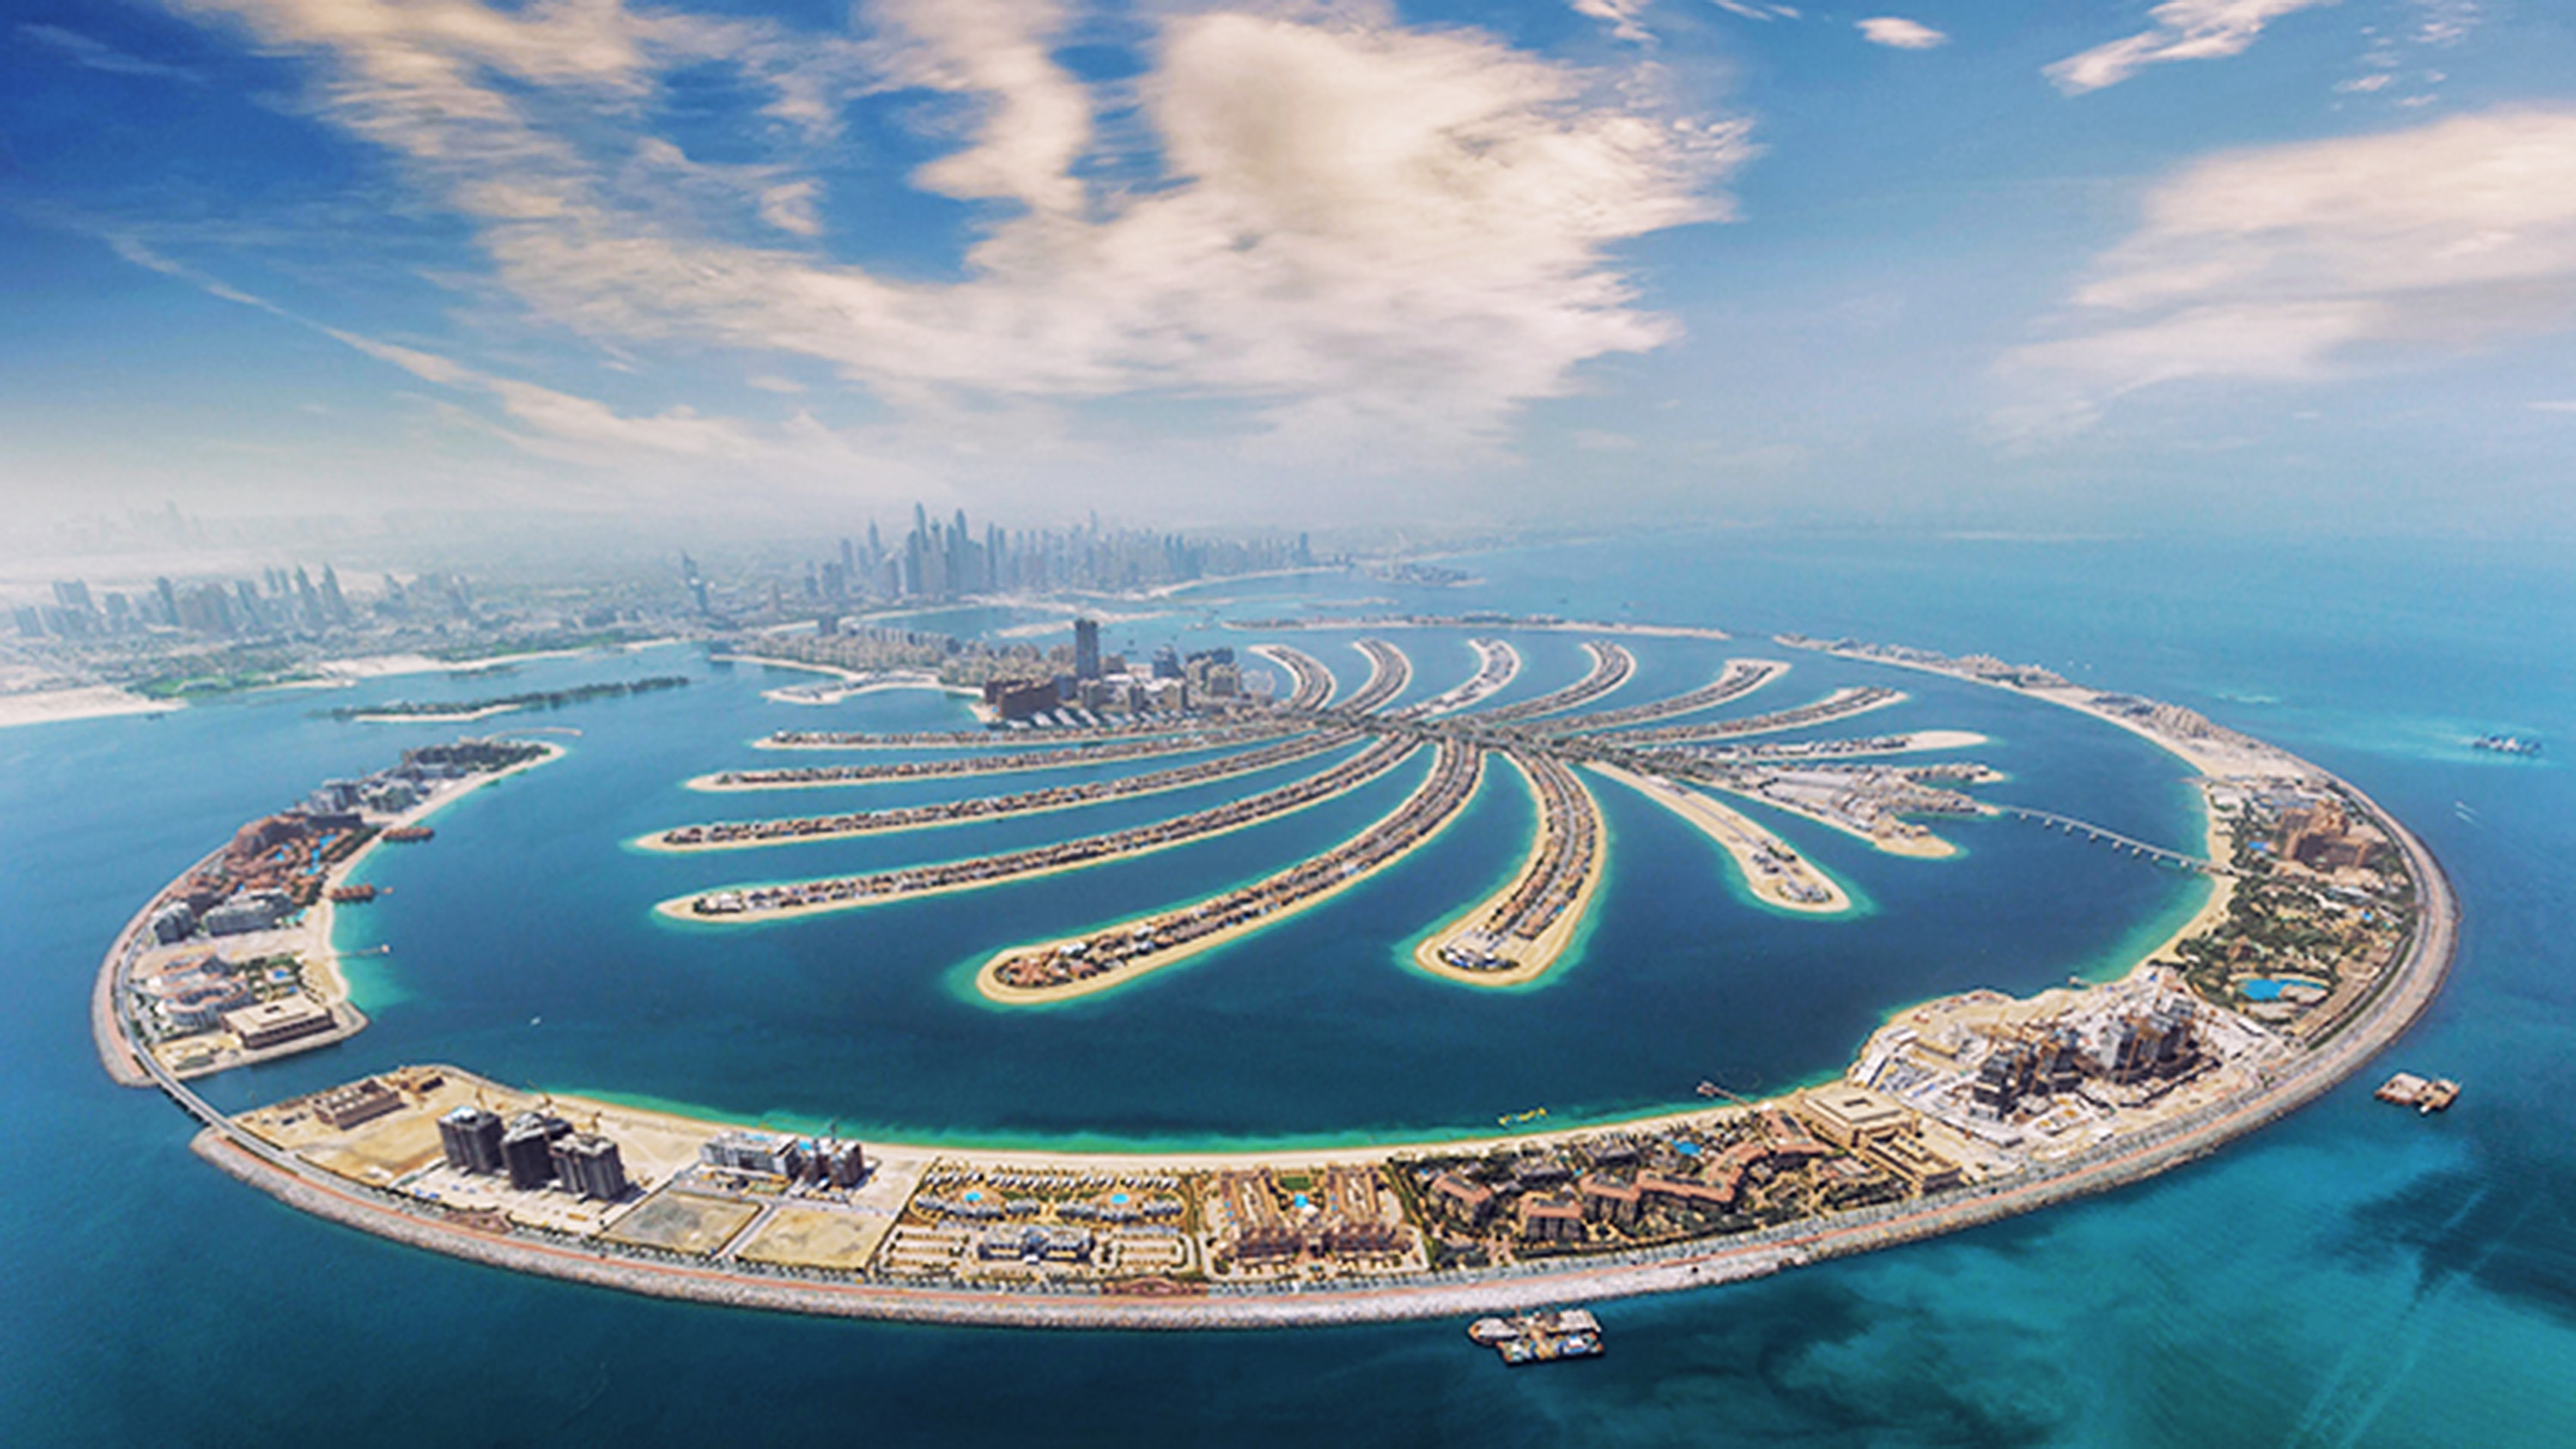 <h2>Visit us at <span style="color: rgb(196, 22, 28);"><strong>MRO Middle East 2020</strong></span><strong>&nbsp;</strong>in Dubai</h2>